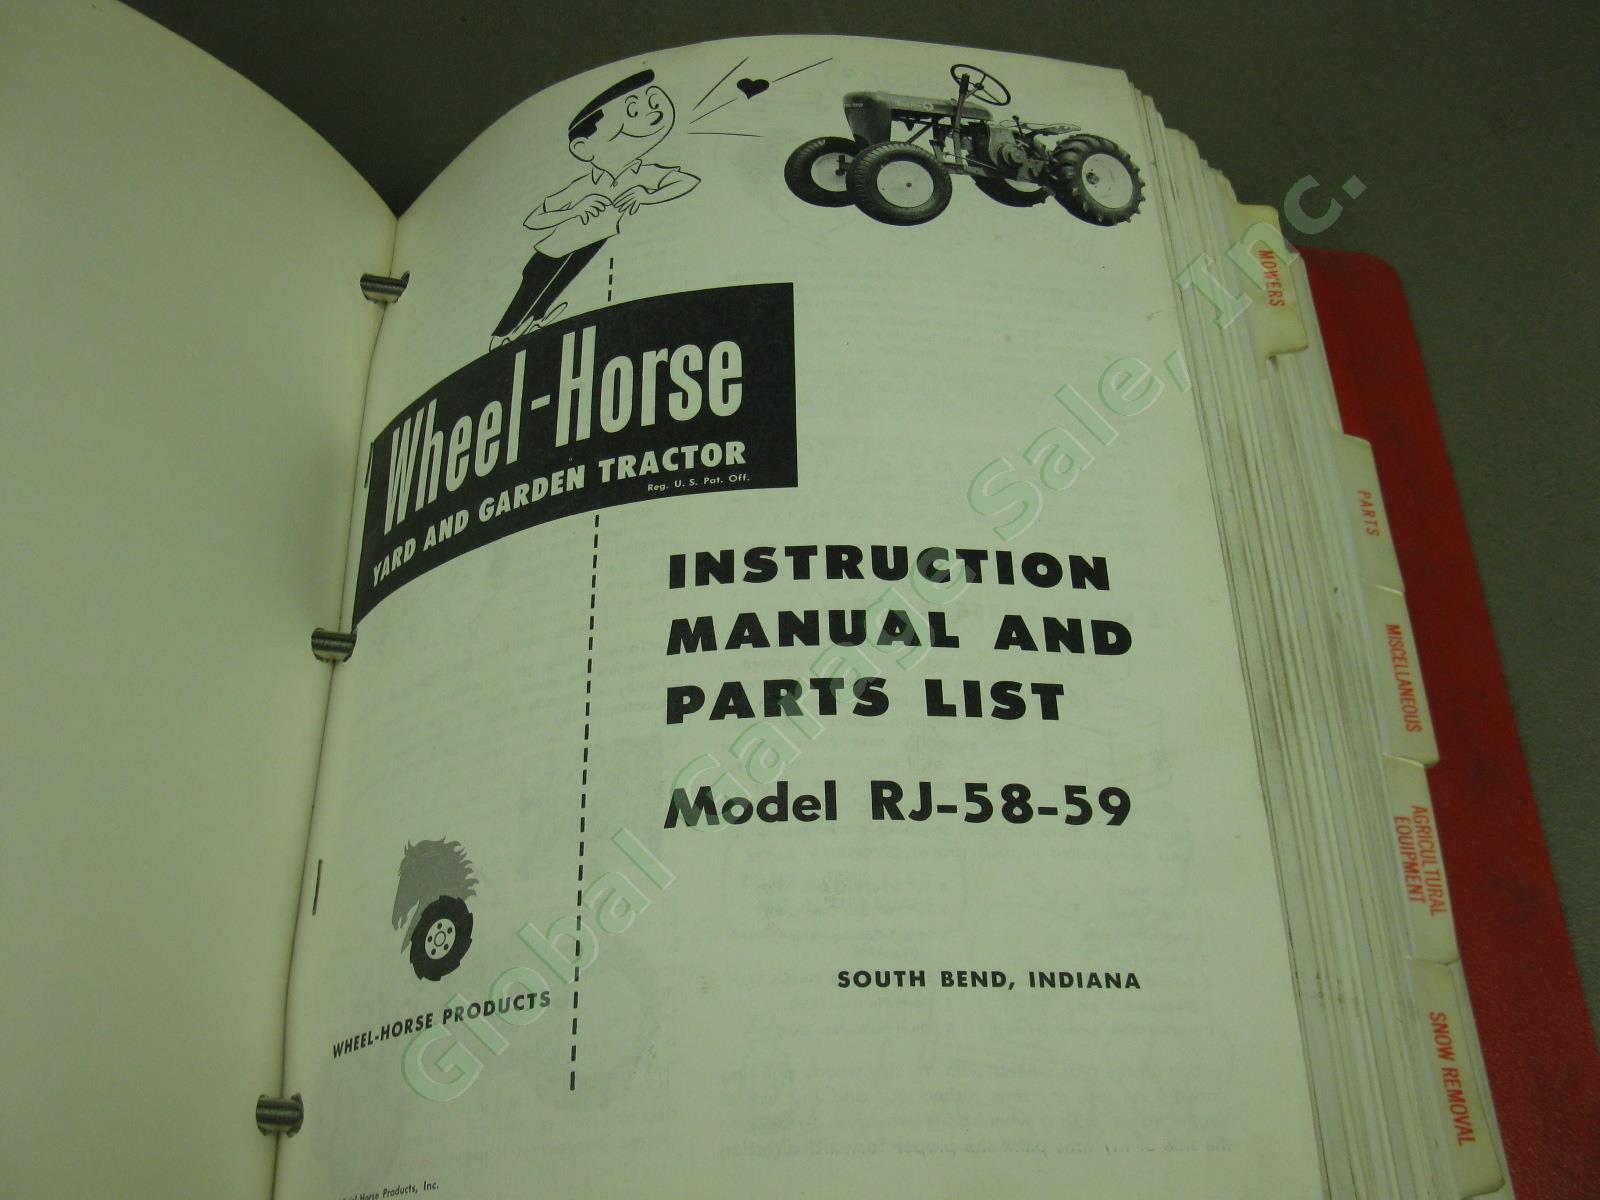 Vtg Wheel Horse Maintenance Manual Part List Lot Tractor Riding Mower 6